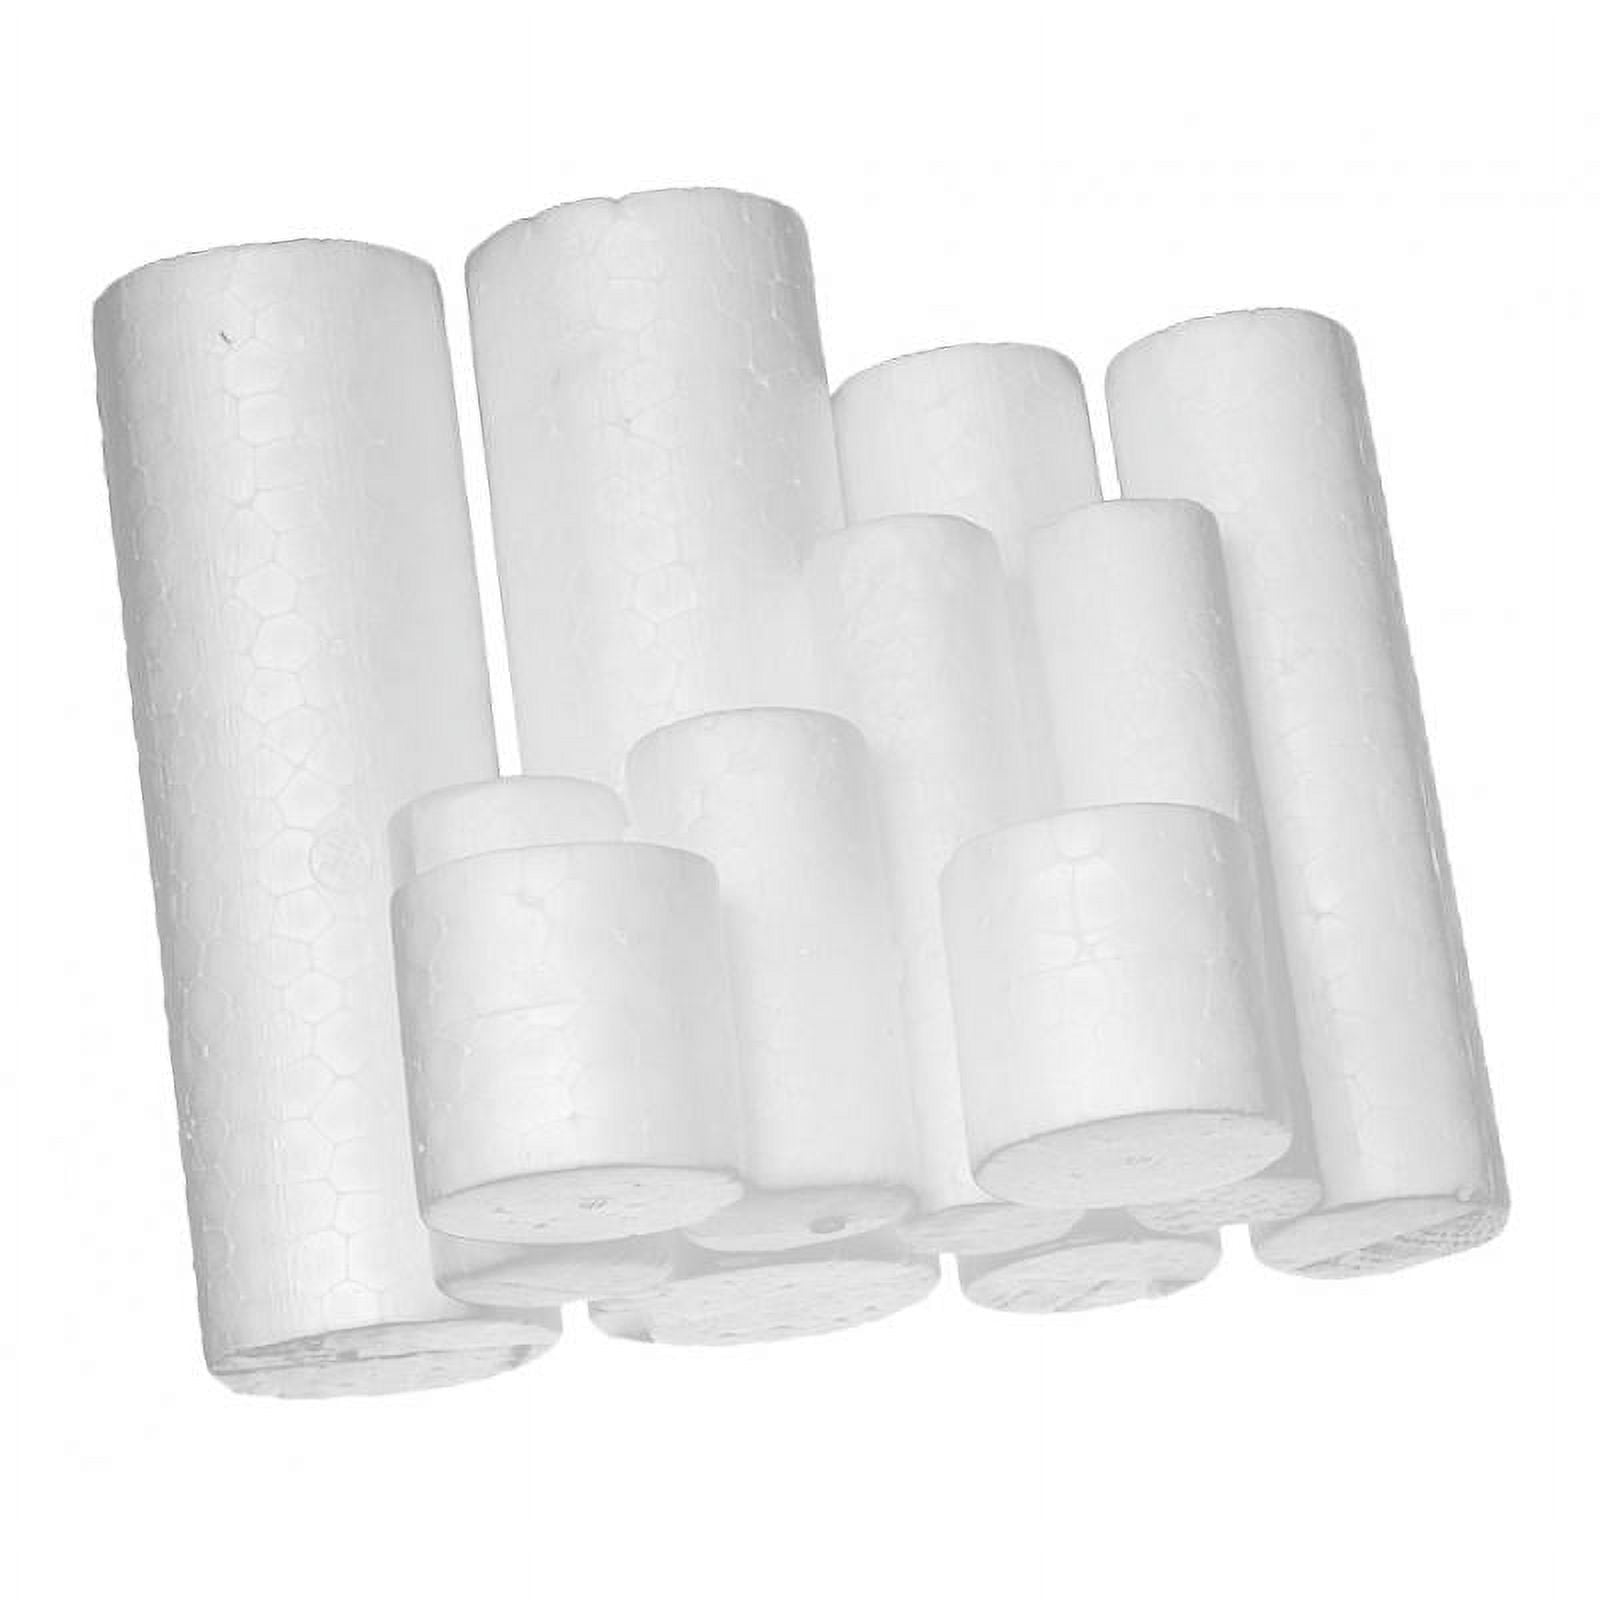 Foam Cylinder Craft Crafts White Cylinders Polystyrene Foams Christmas Diy  Block Rods Shapes Ornament Shape Modeling